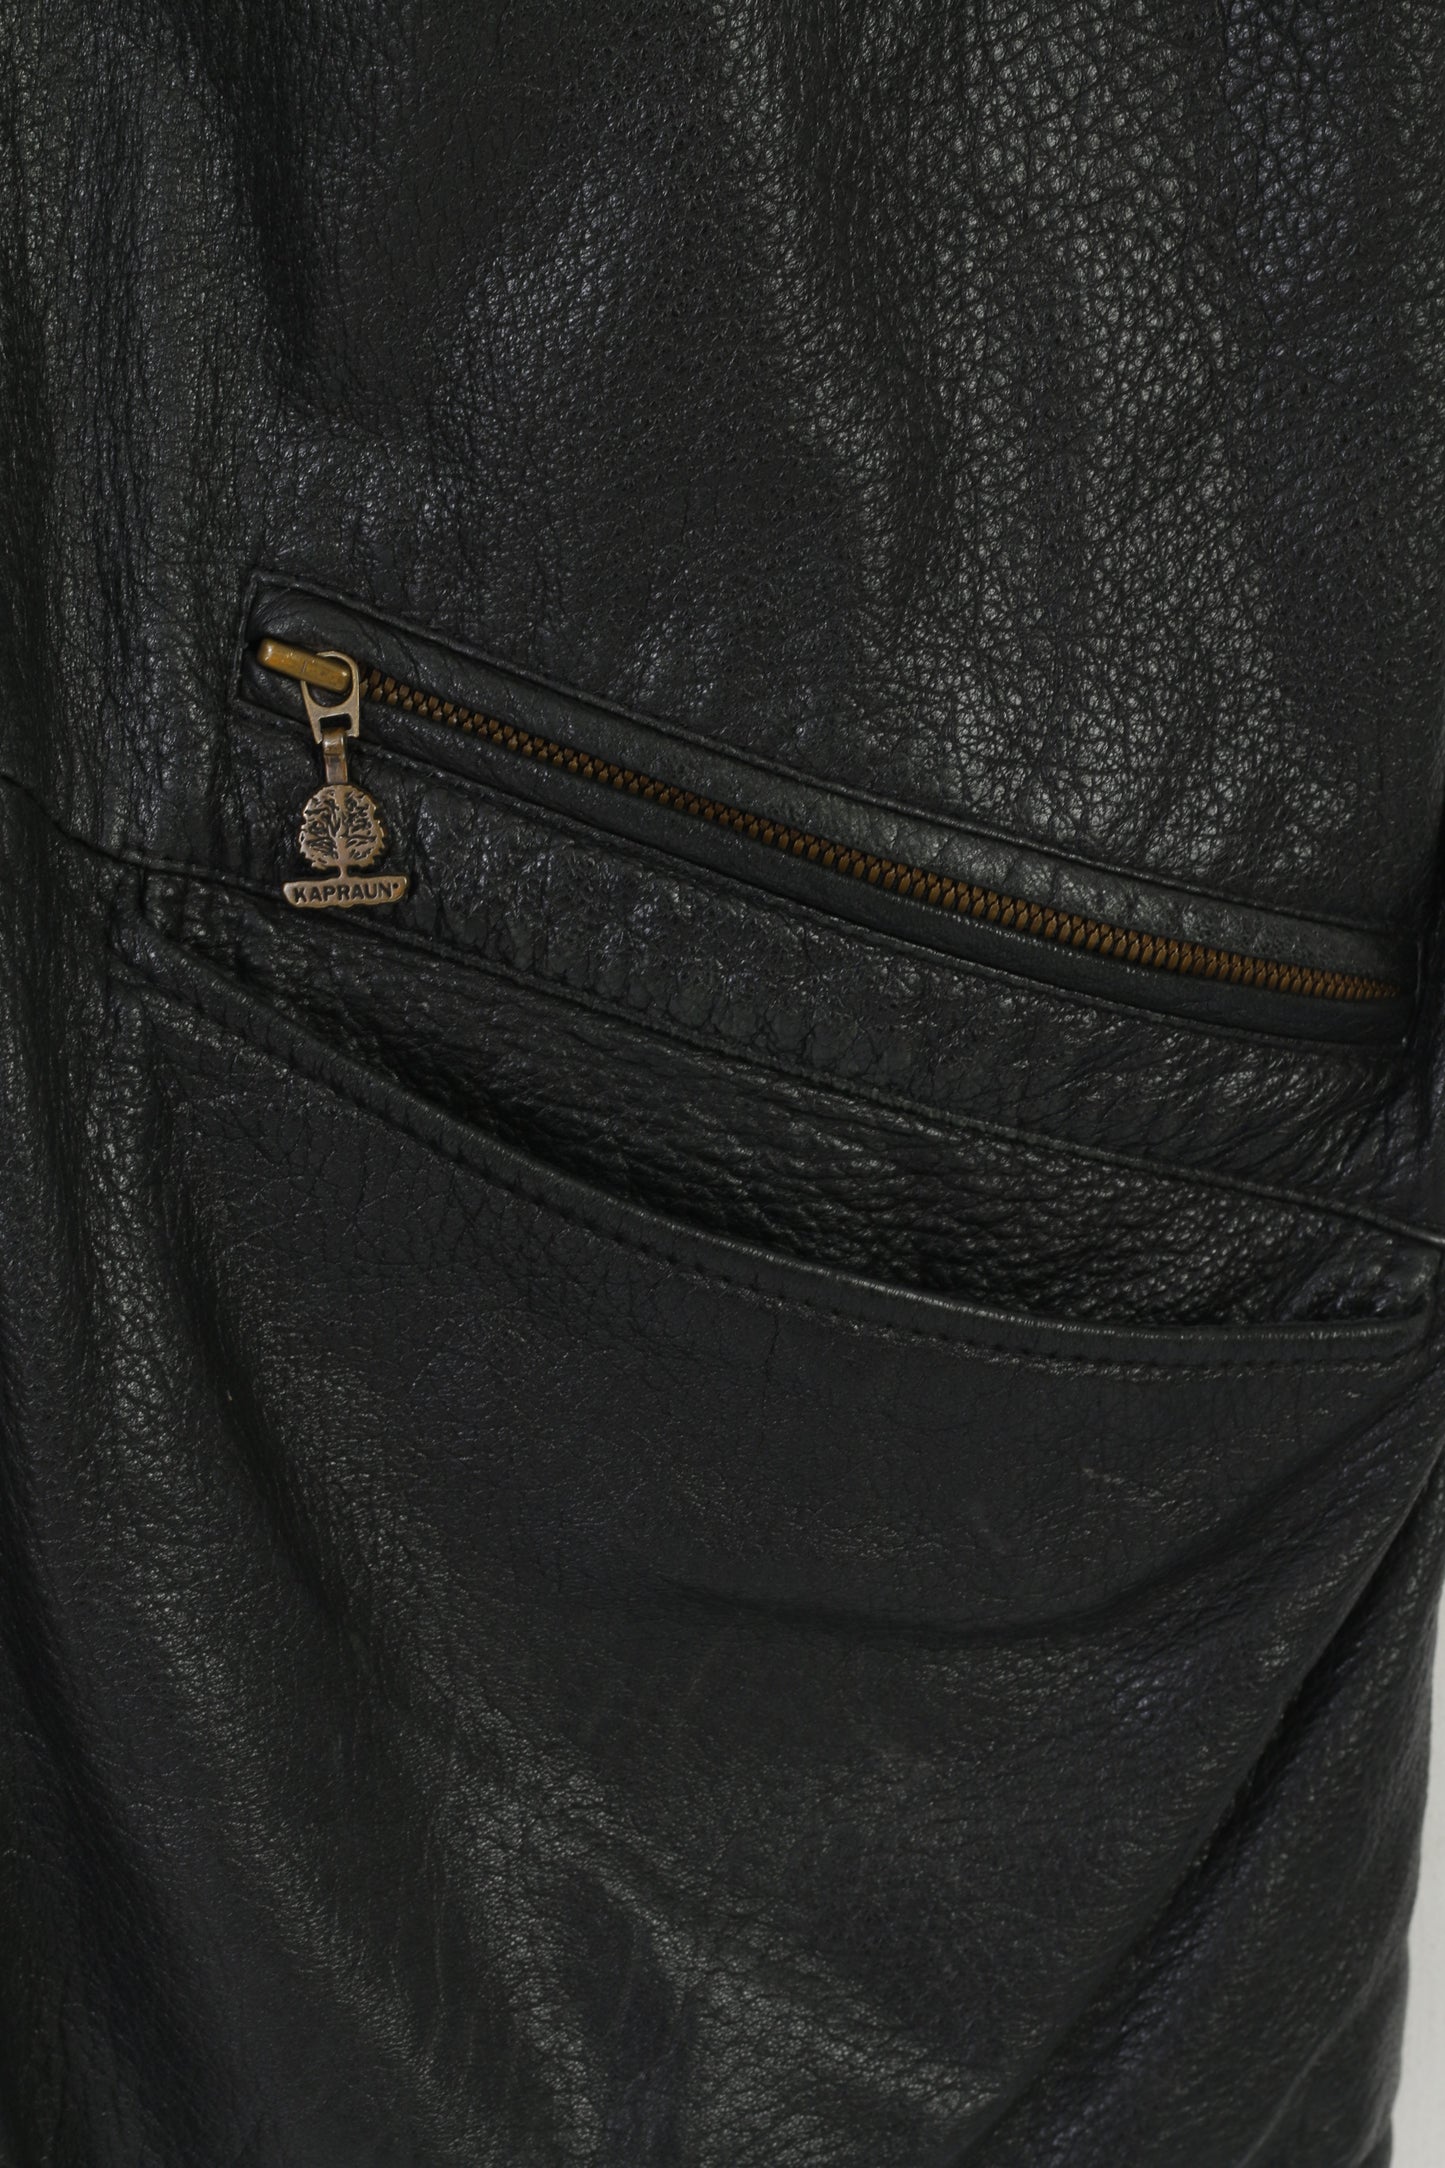 Gilet Kapraun da uomo XL Gilet foderato in lana merino con bottoni in pelle nera lucida